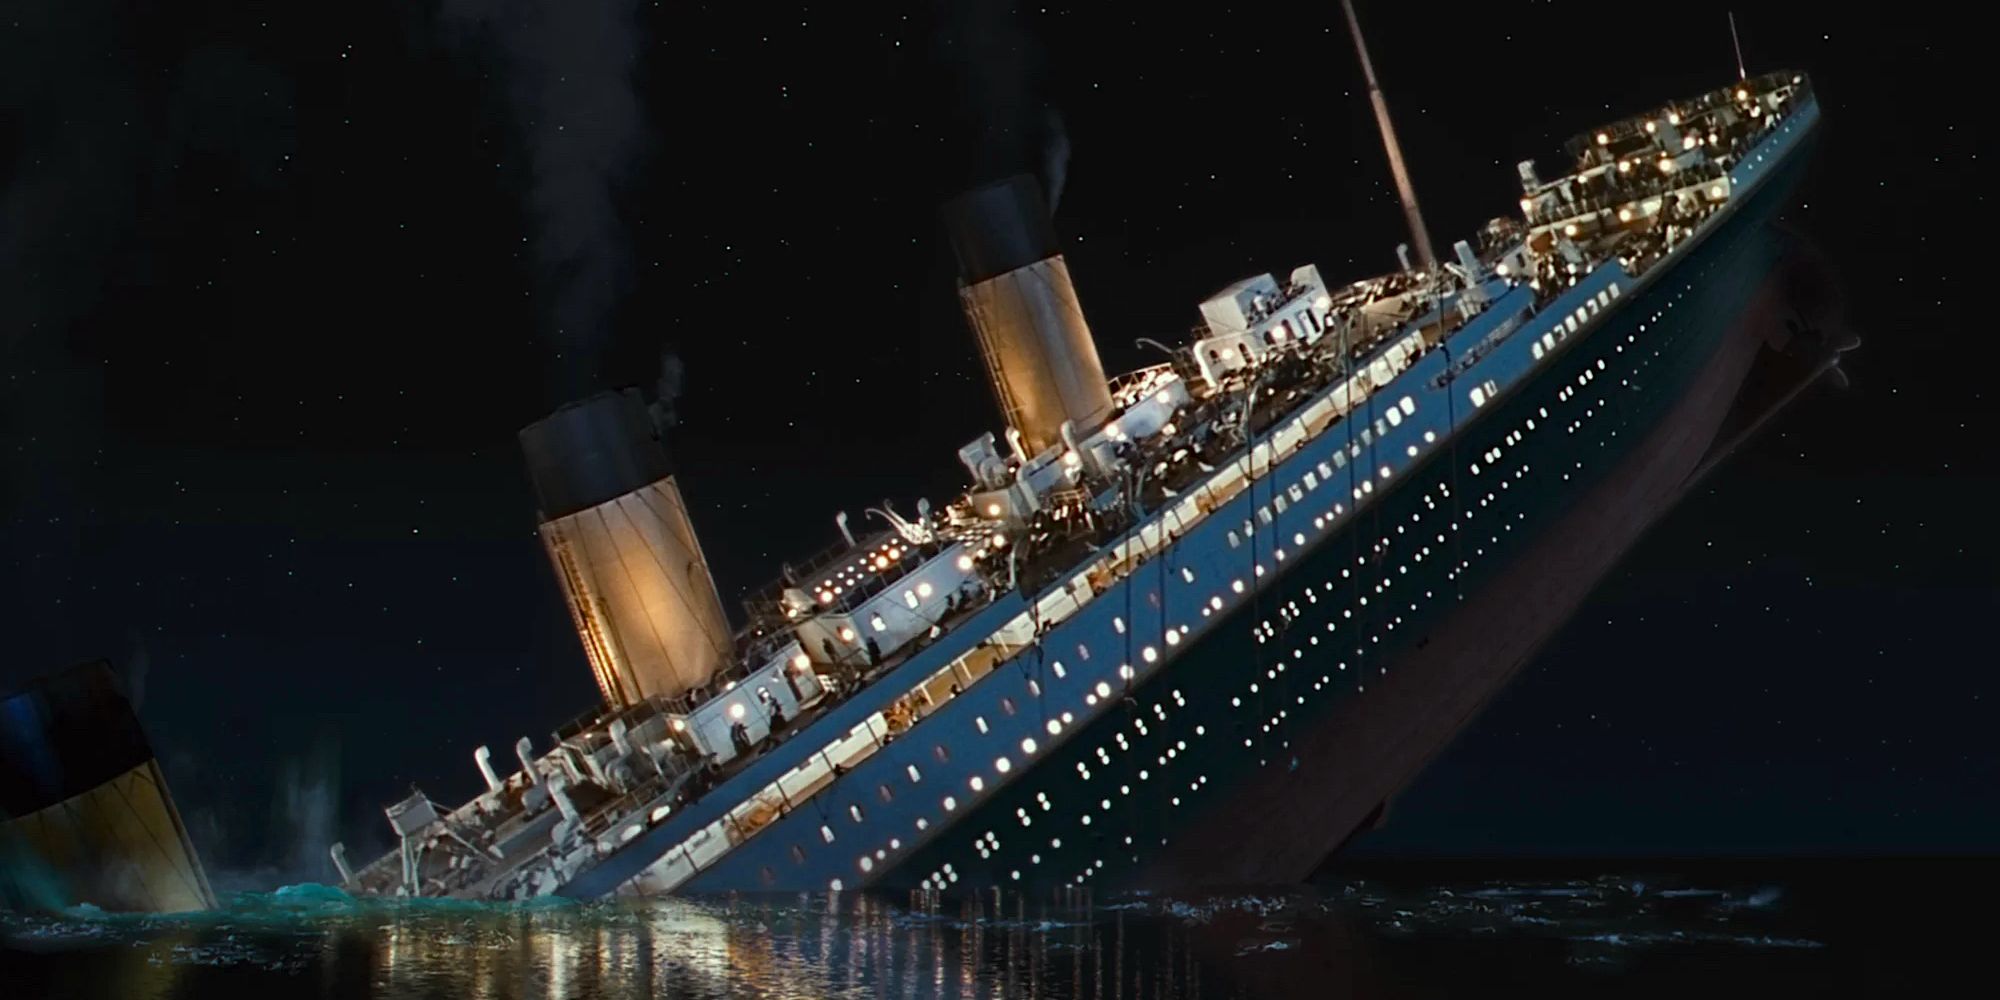 Titanic afundando à noite